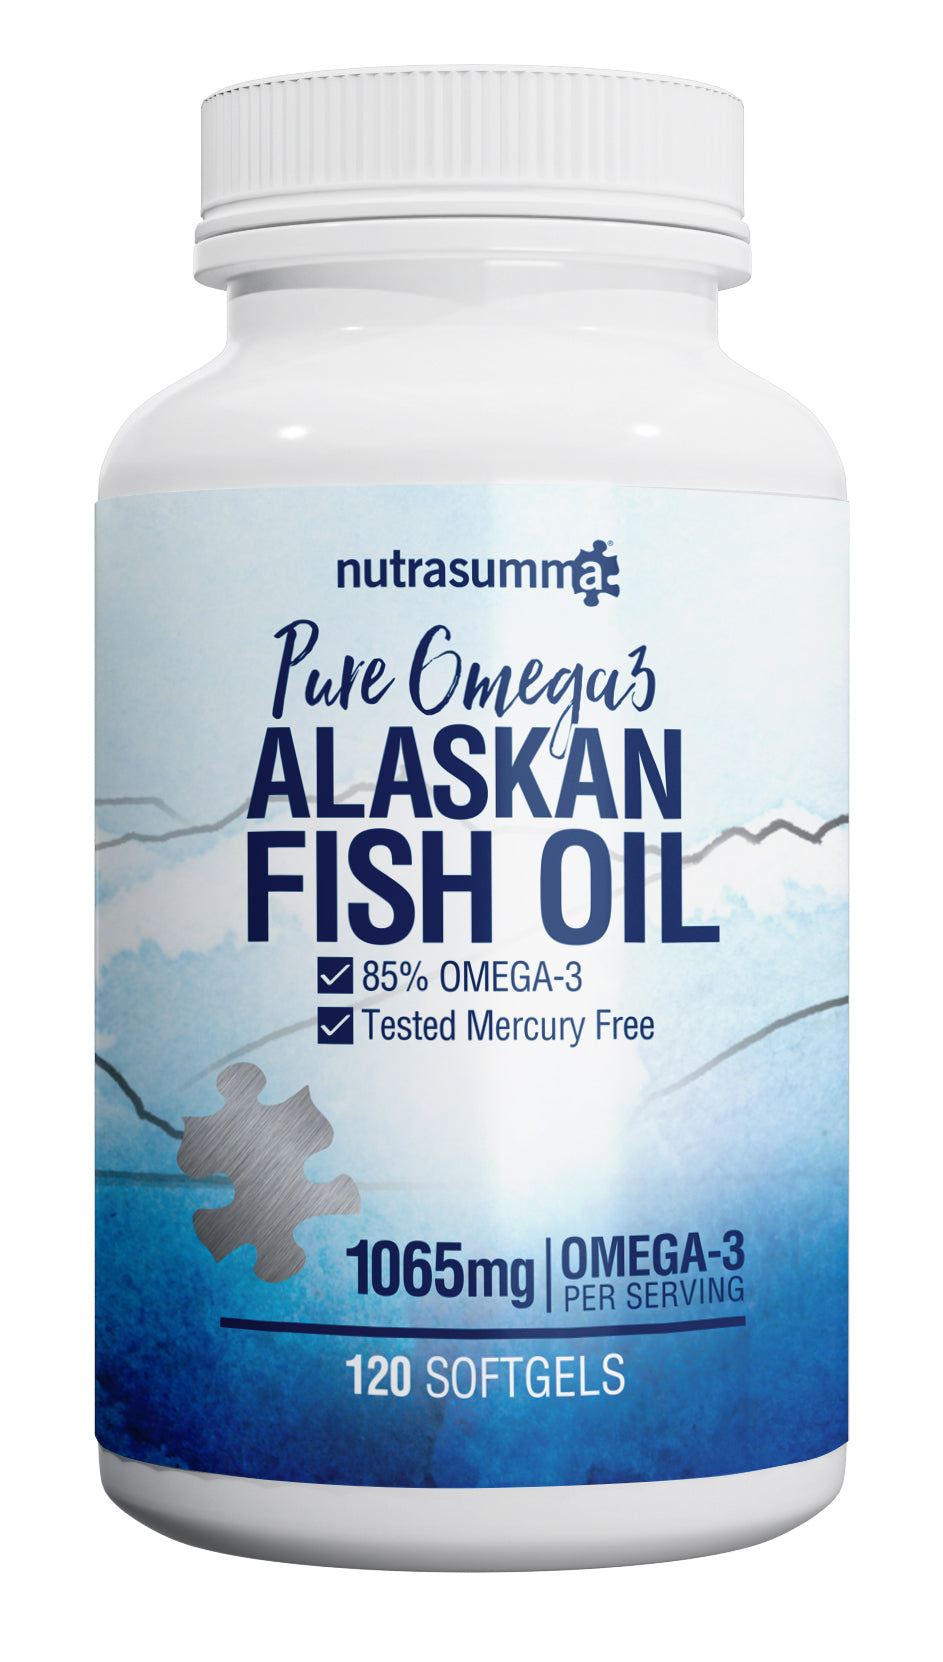 Wild Alaskan Fish Oil - 1065mg Omega-3 High EPA (120 Softgels)